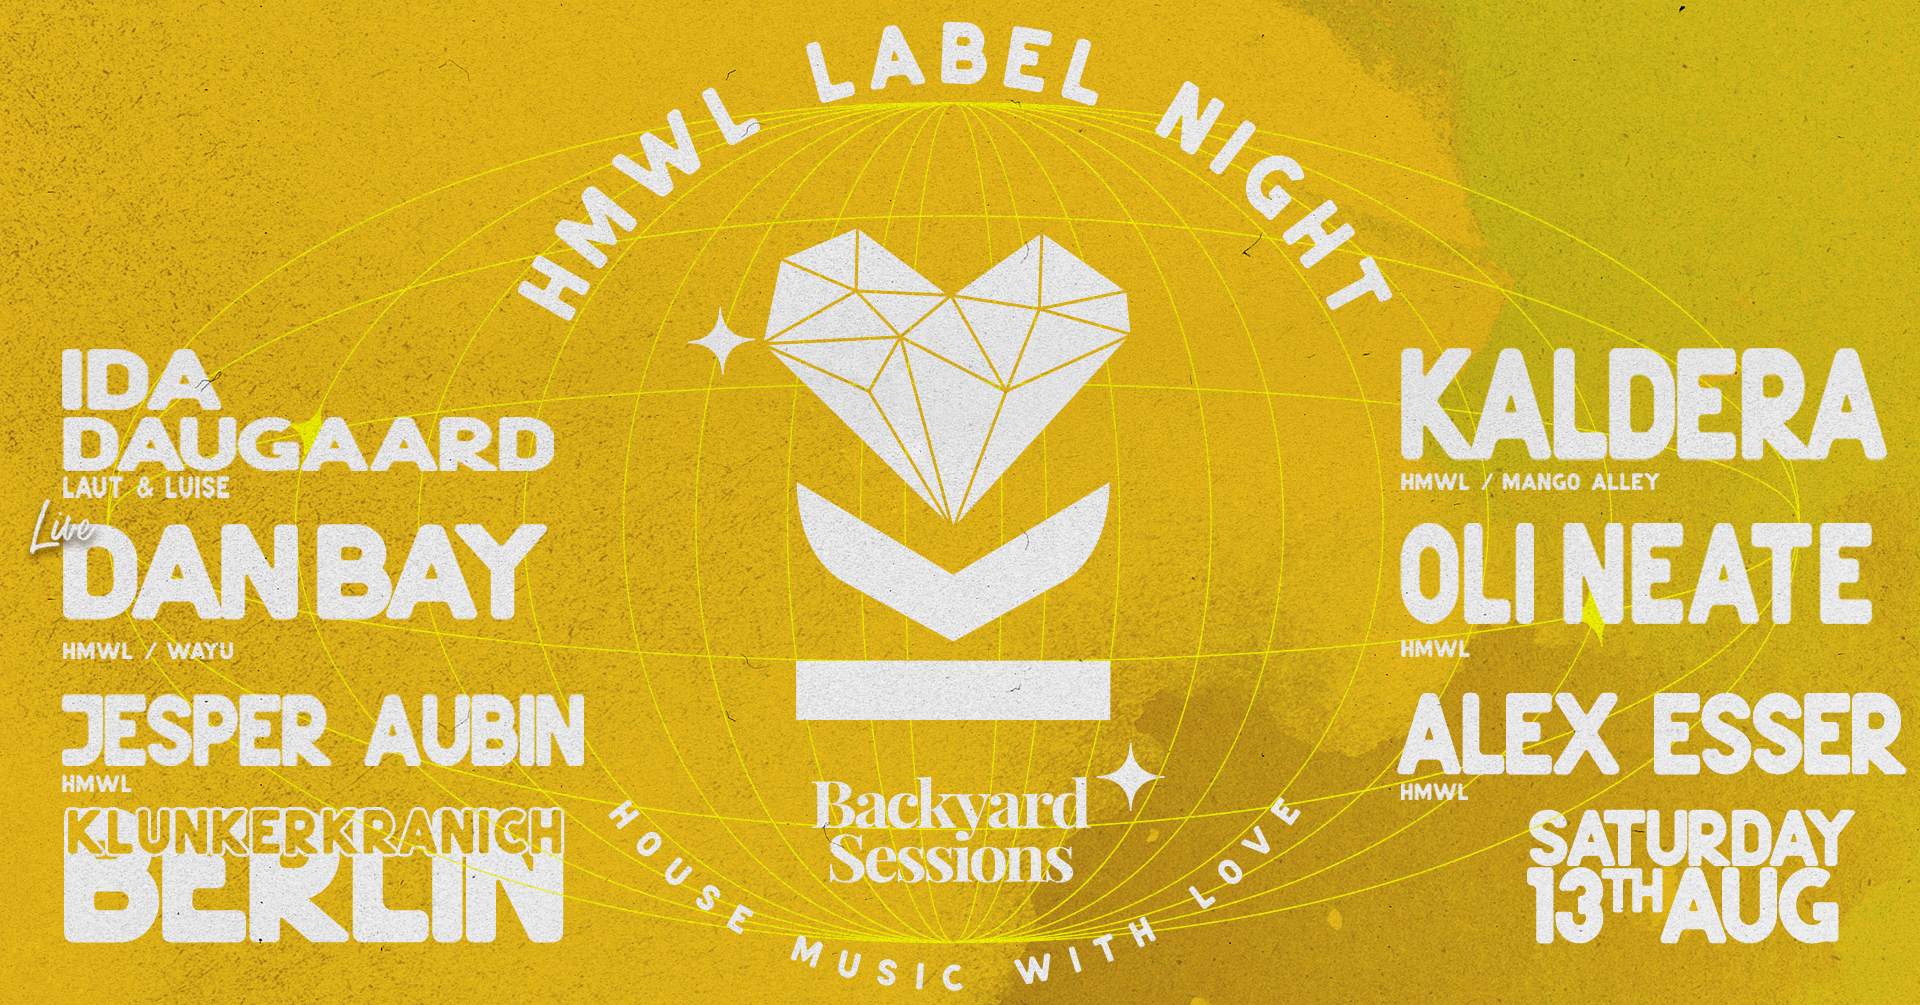 HMWL Label Night with Ida Daugaard, Dan Bay, Kaldera - フライヤー表